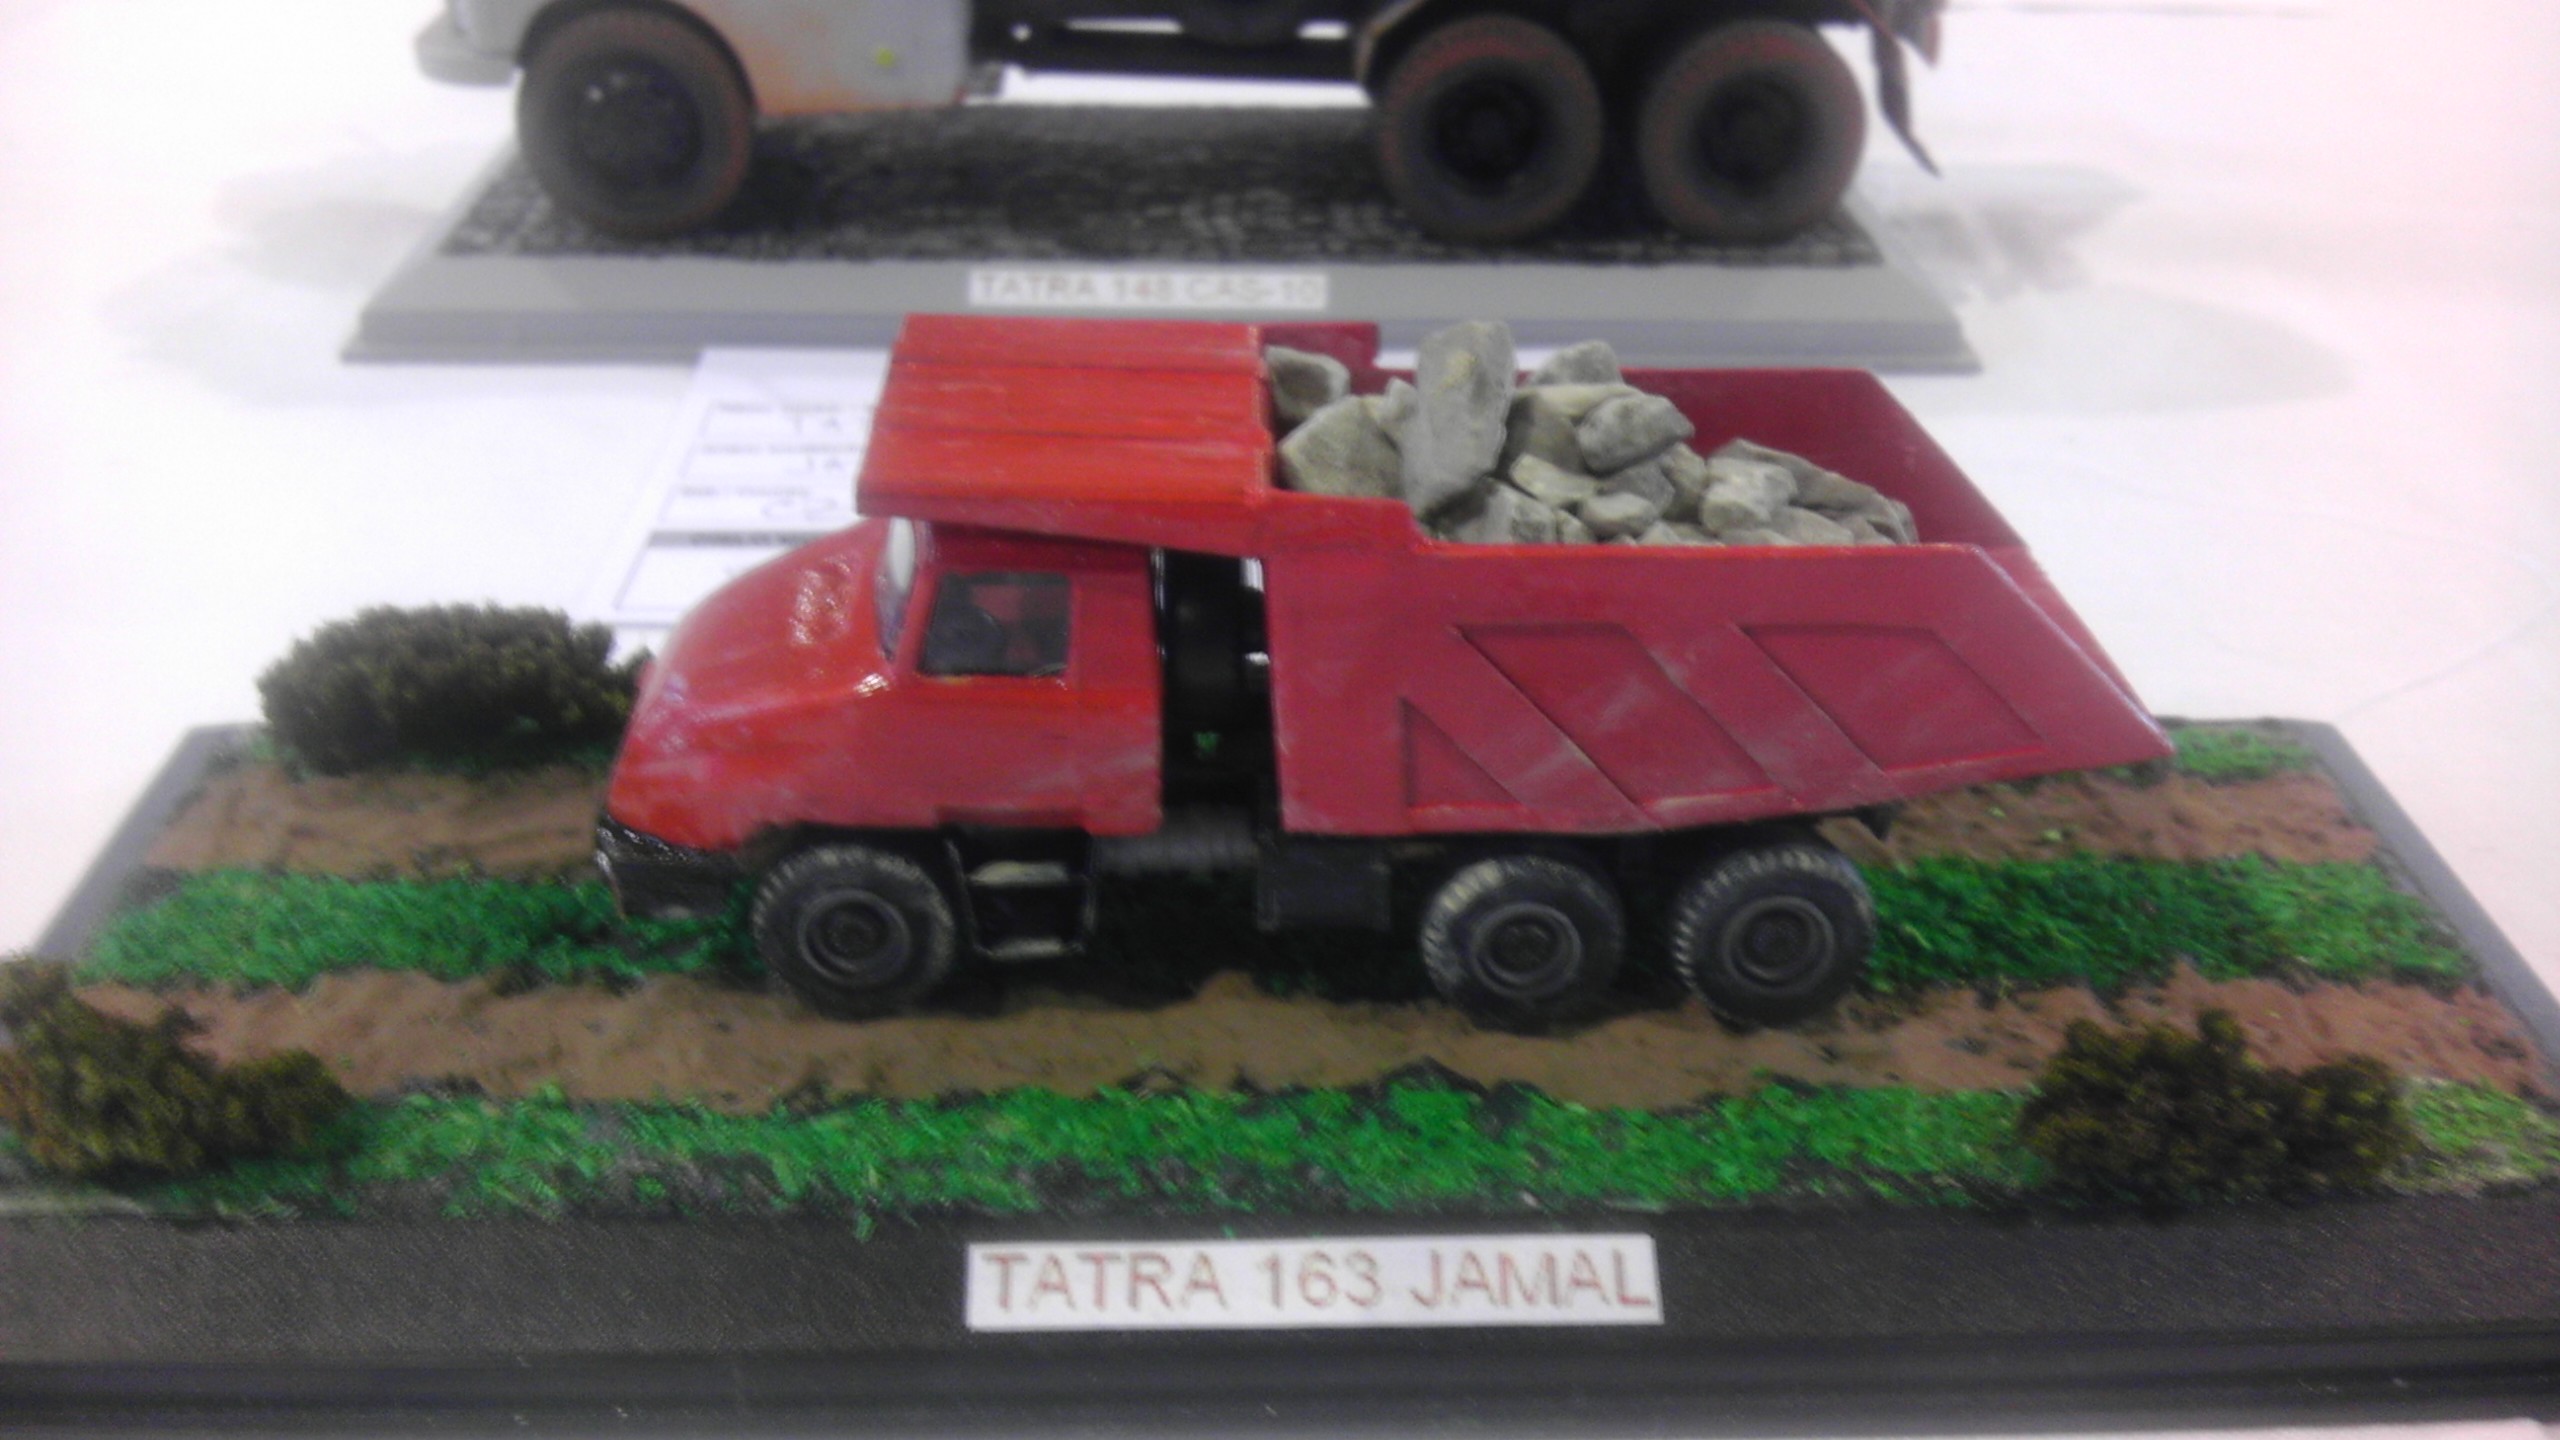 TATRA 163 JAMAL